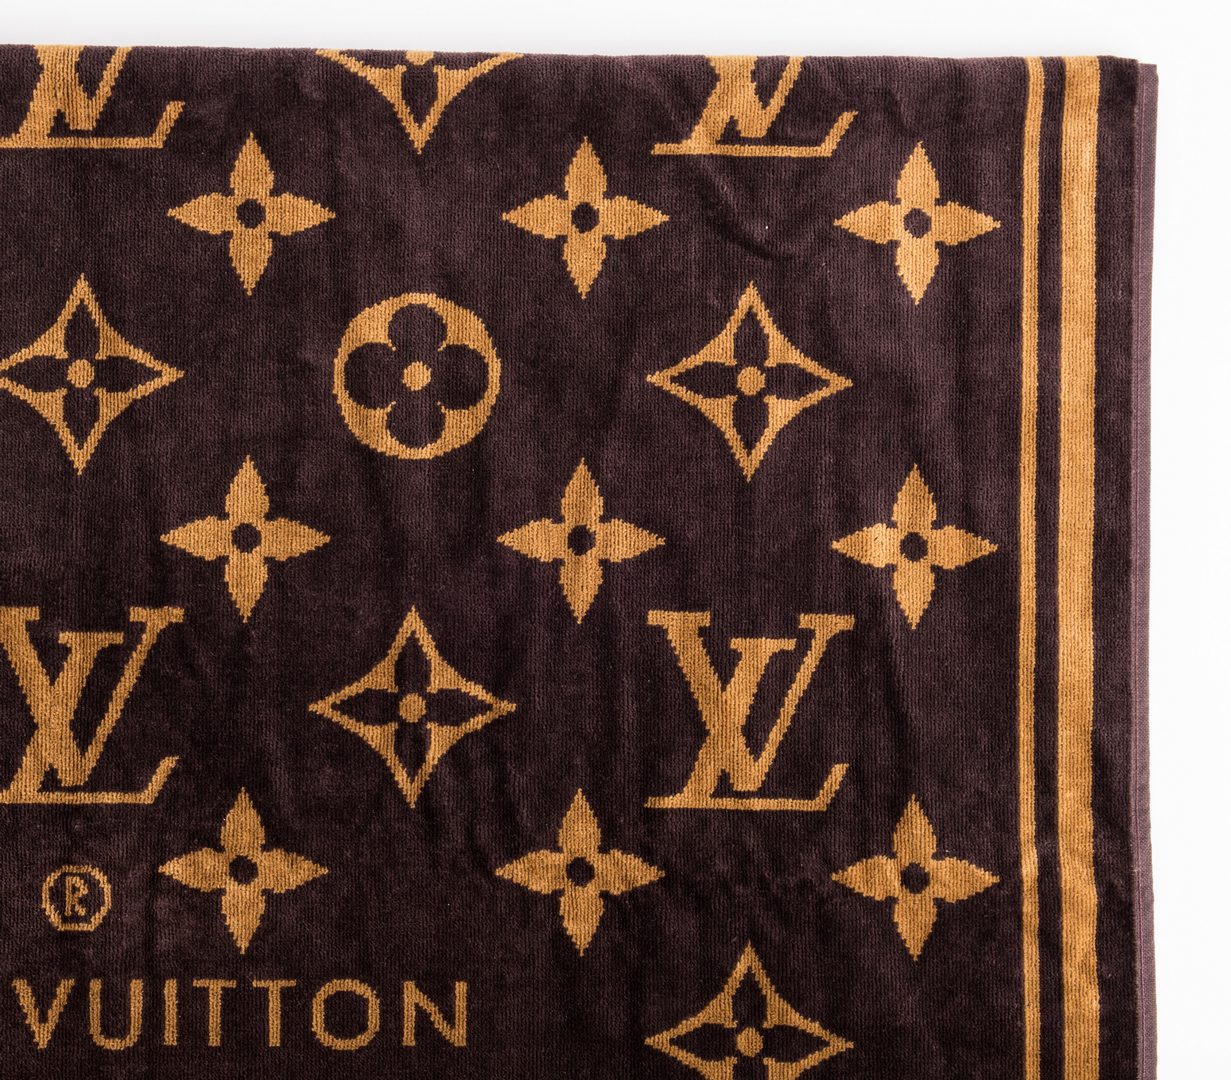 Lot 832: 4 Designor Louis Vuitton Items & 3 Related Books